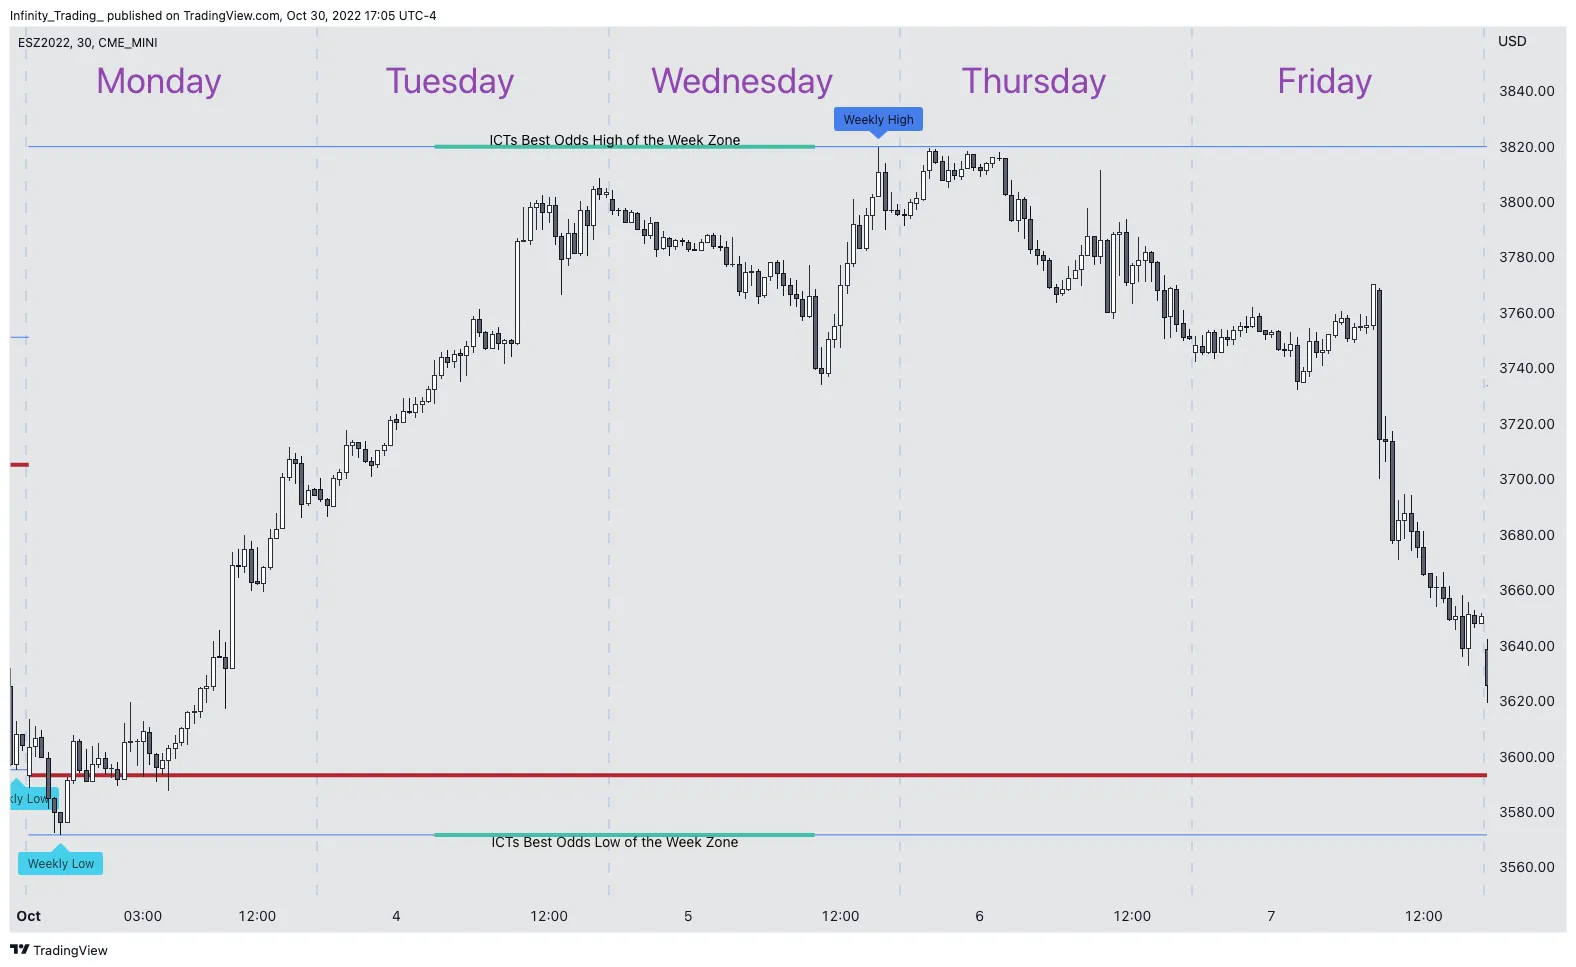 Weekly Power 3 TradingView Indicator Image 1